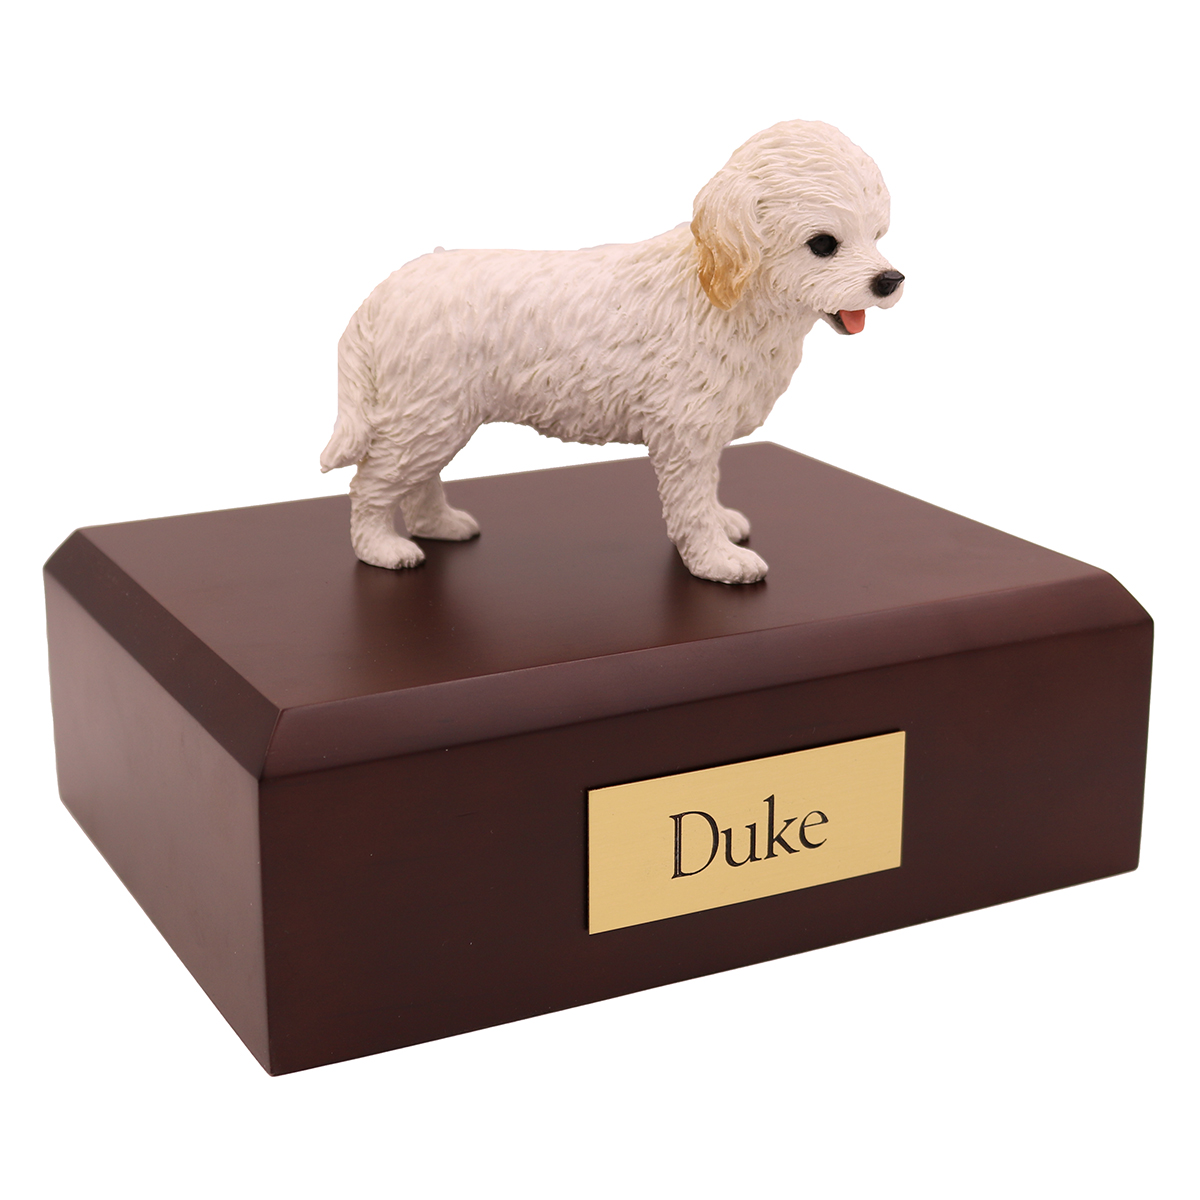 Dog, Cockapoo, White - Figurine Urn